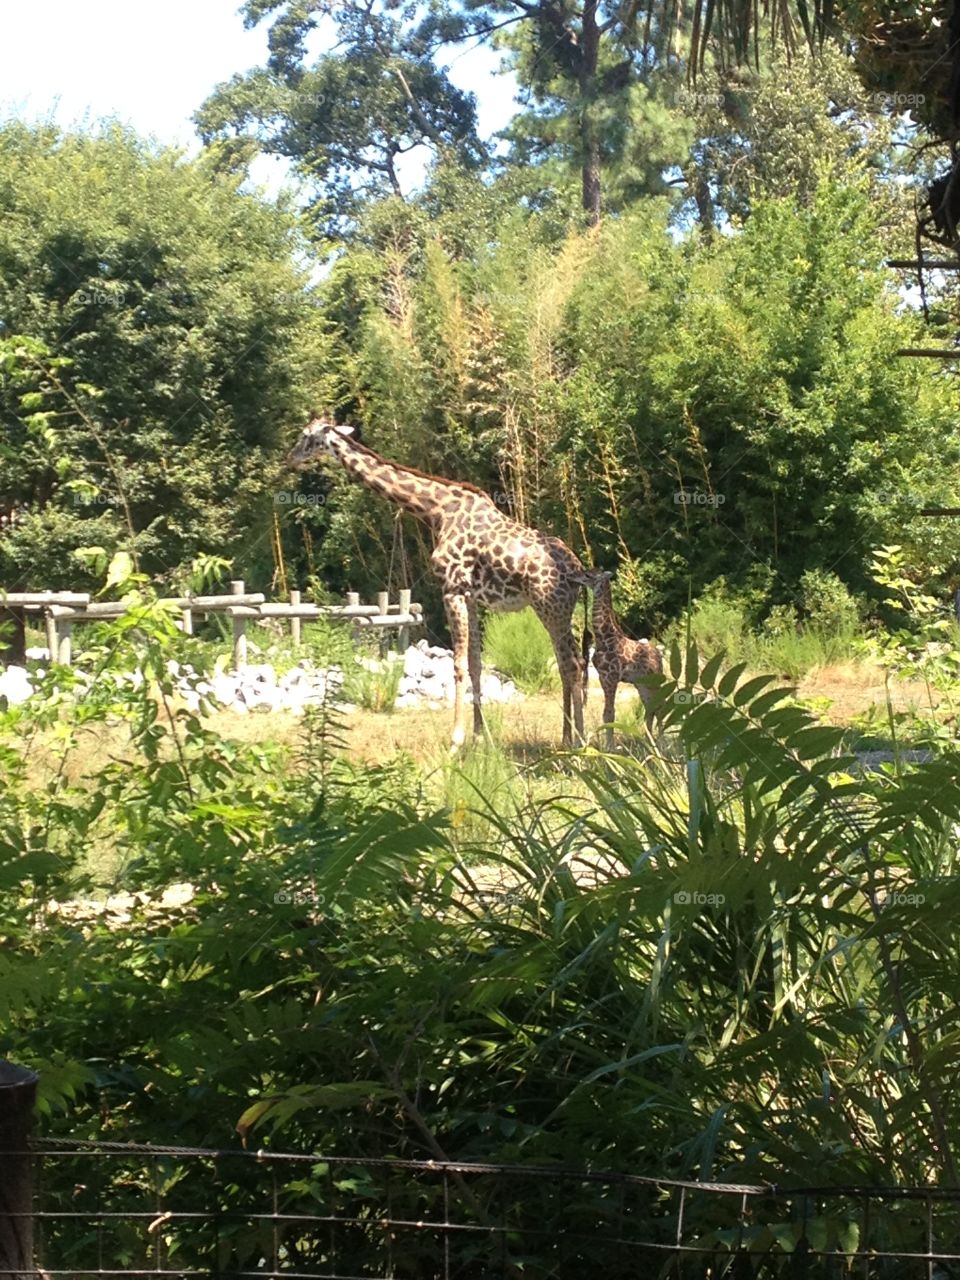 a giraffe at the zoo